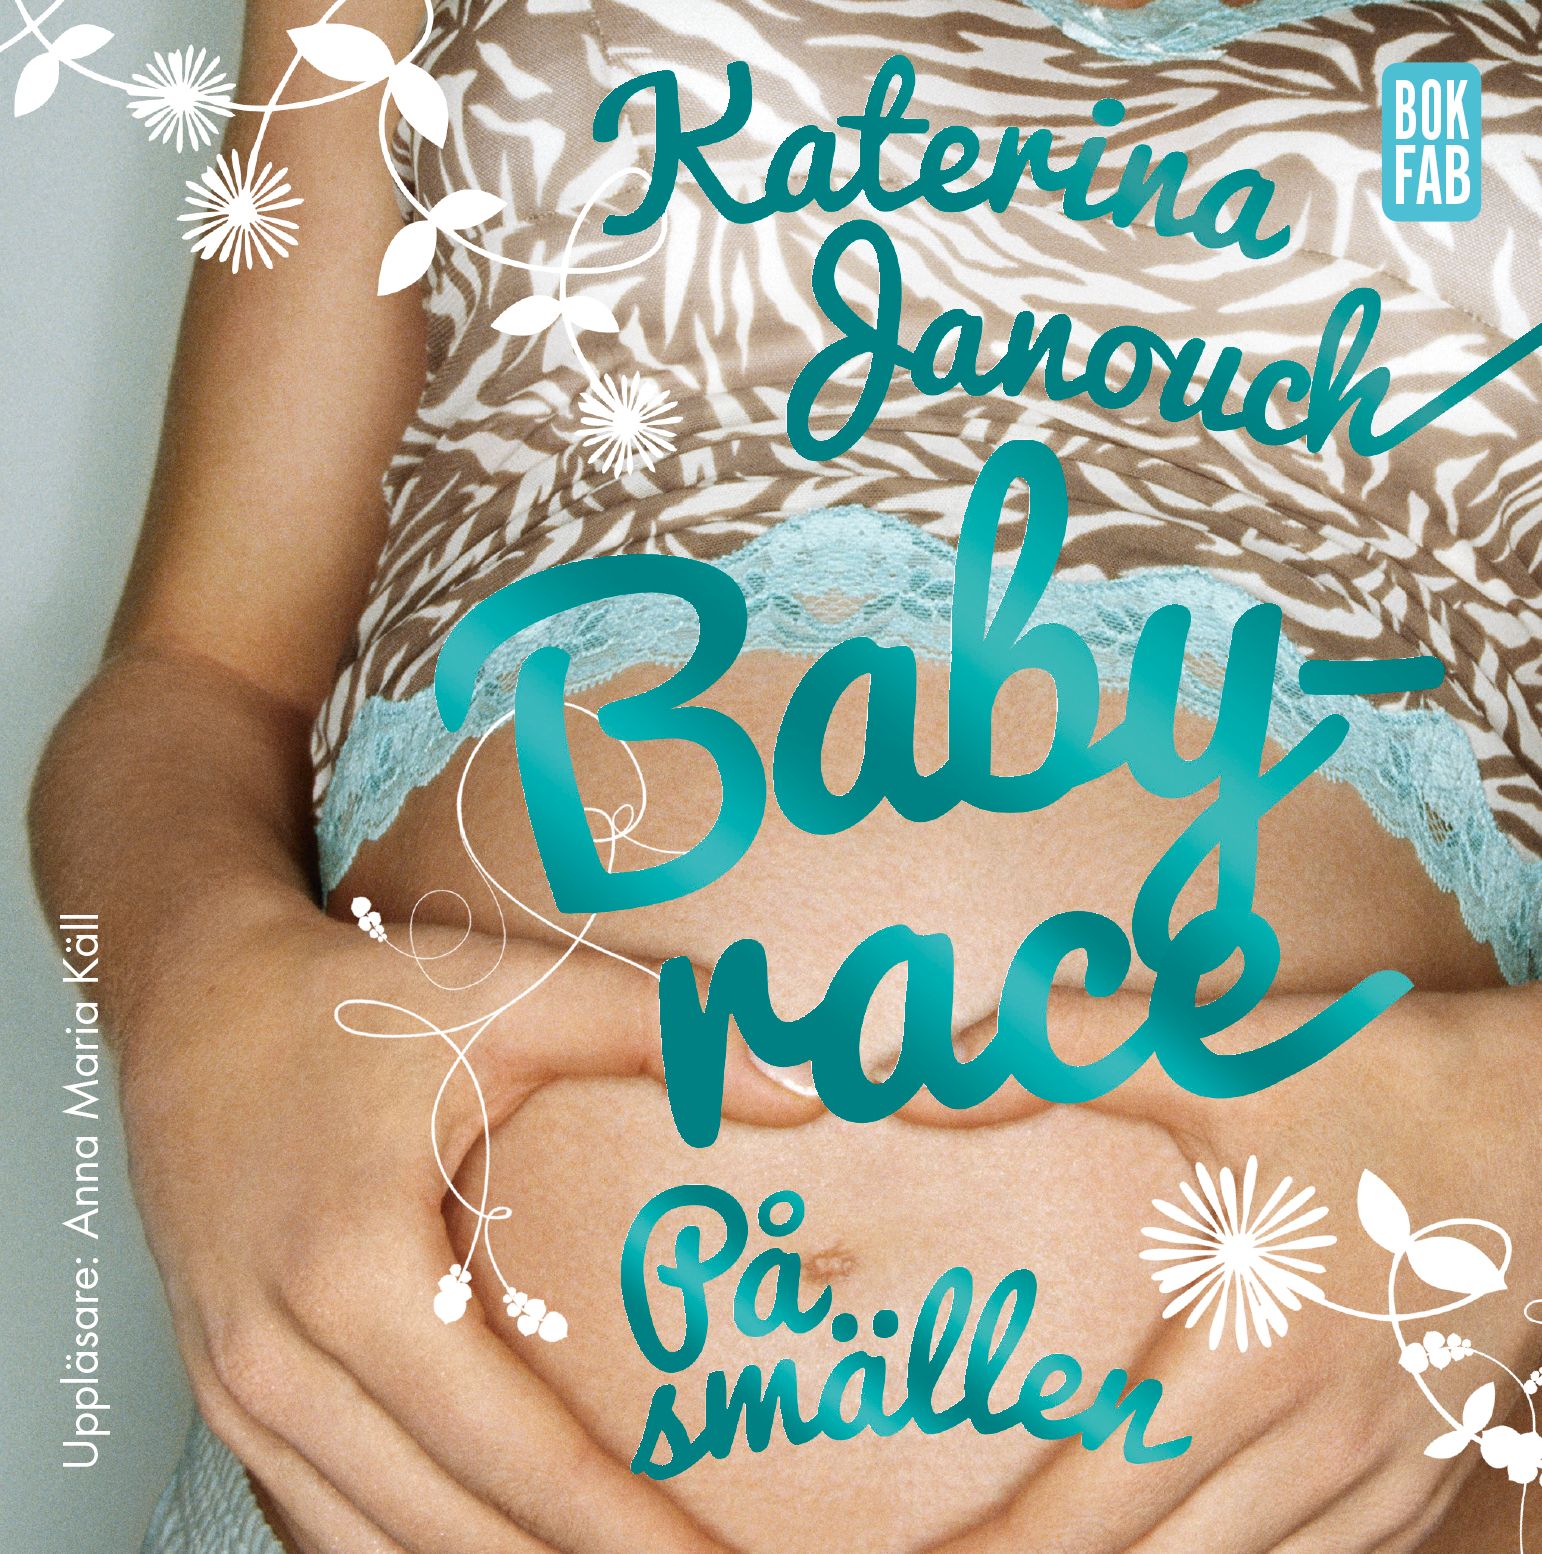 Babyrace : På smällen, audiobook by Katarina Janouch